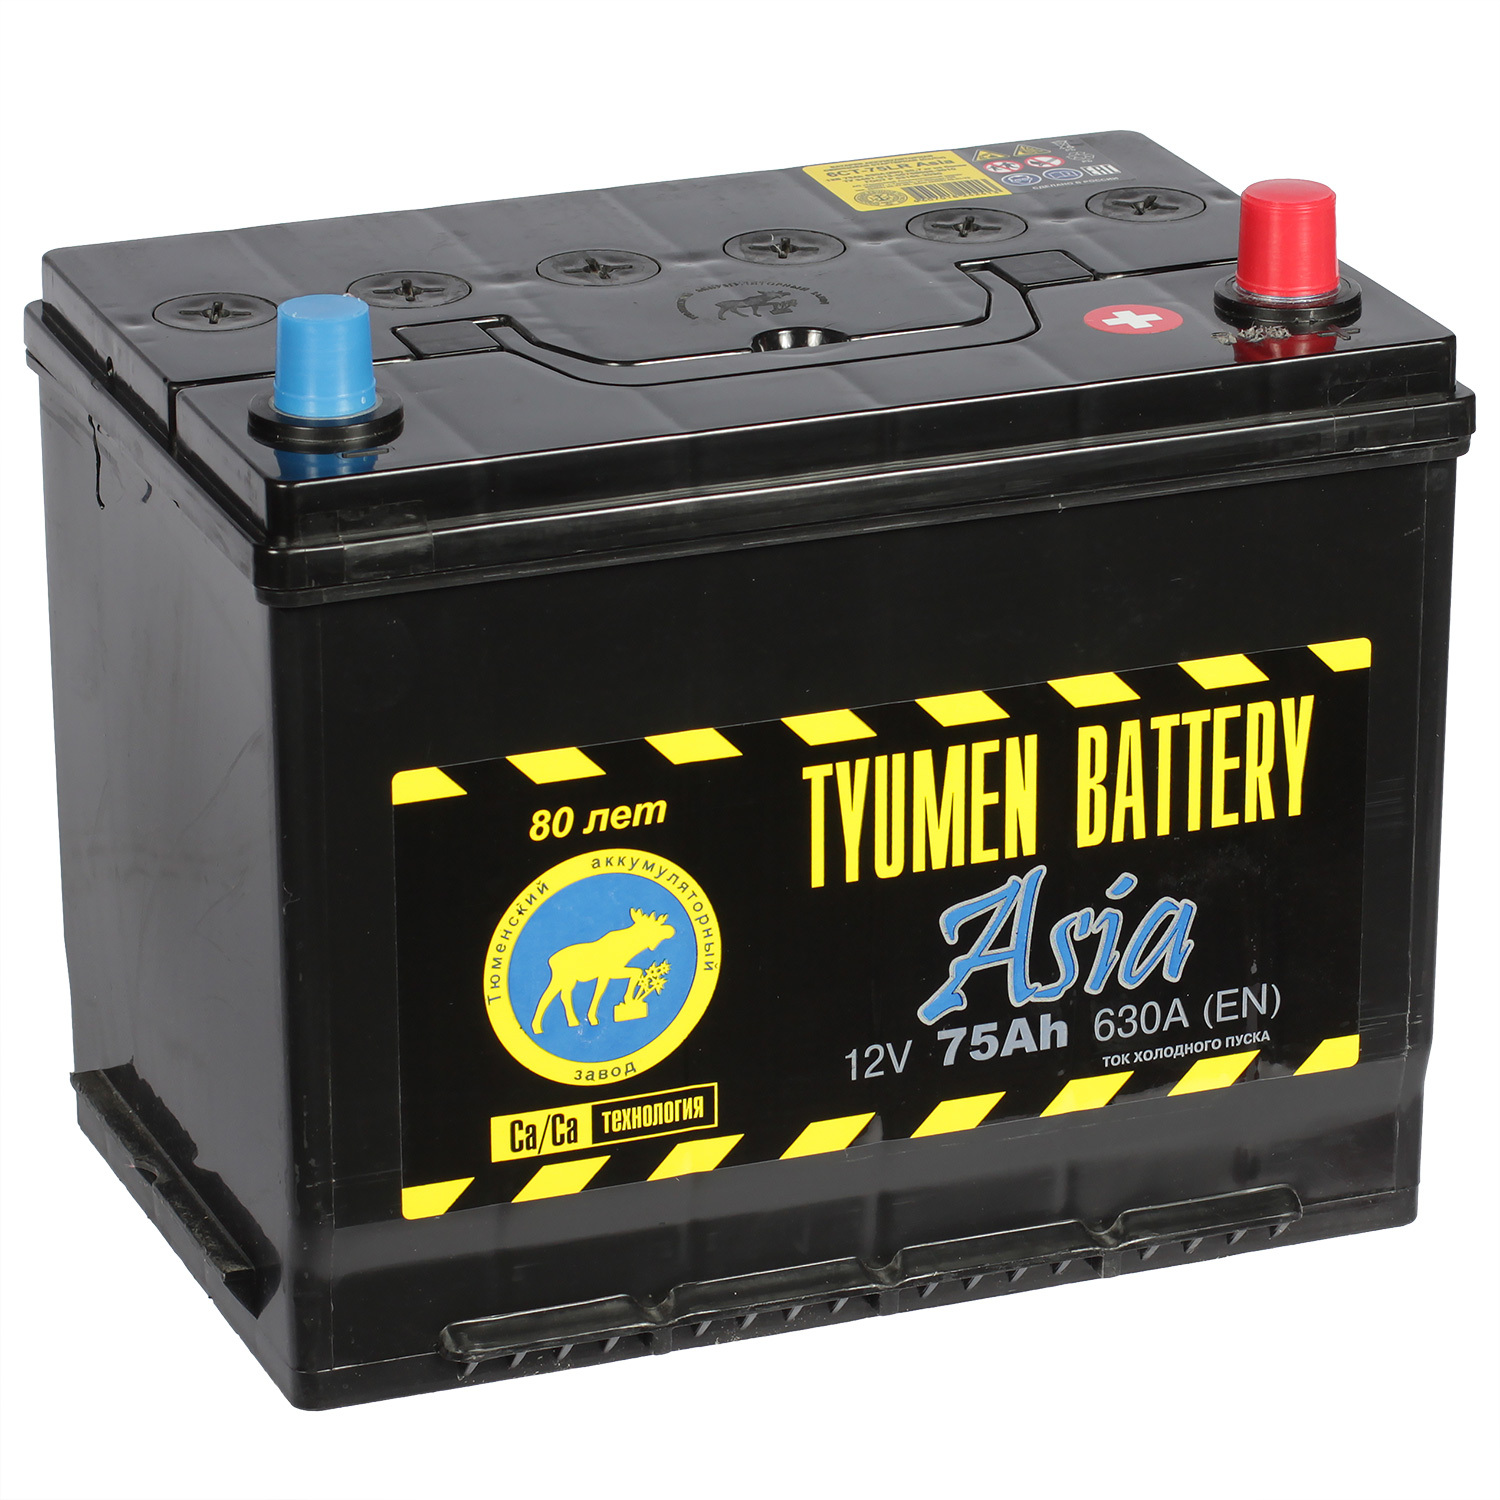 Tyumen Battery Автомобильный аккумулятор Tyumen Battery Asia 75 Ач обратная полярность D26L tyumen battery автомобильный аккумулятор tyumen battery 65 ач обратная полярность d23l